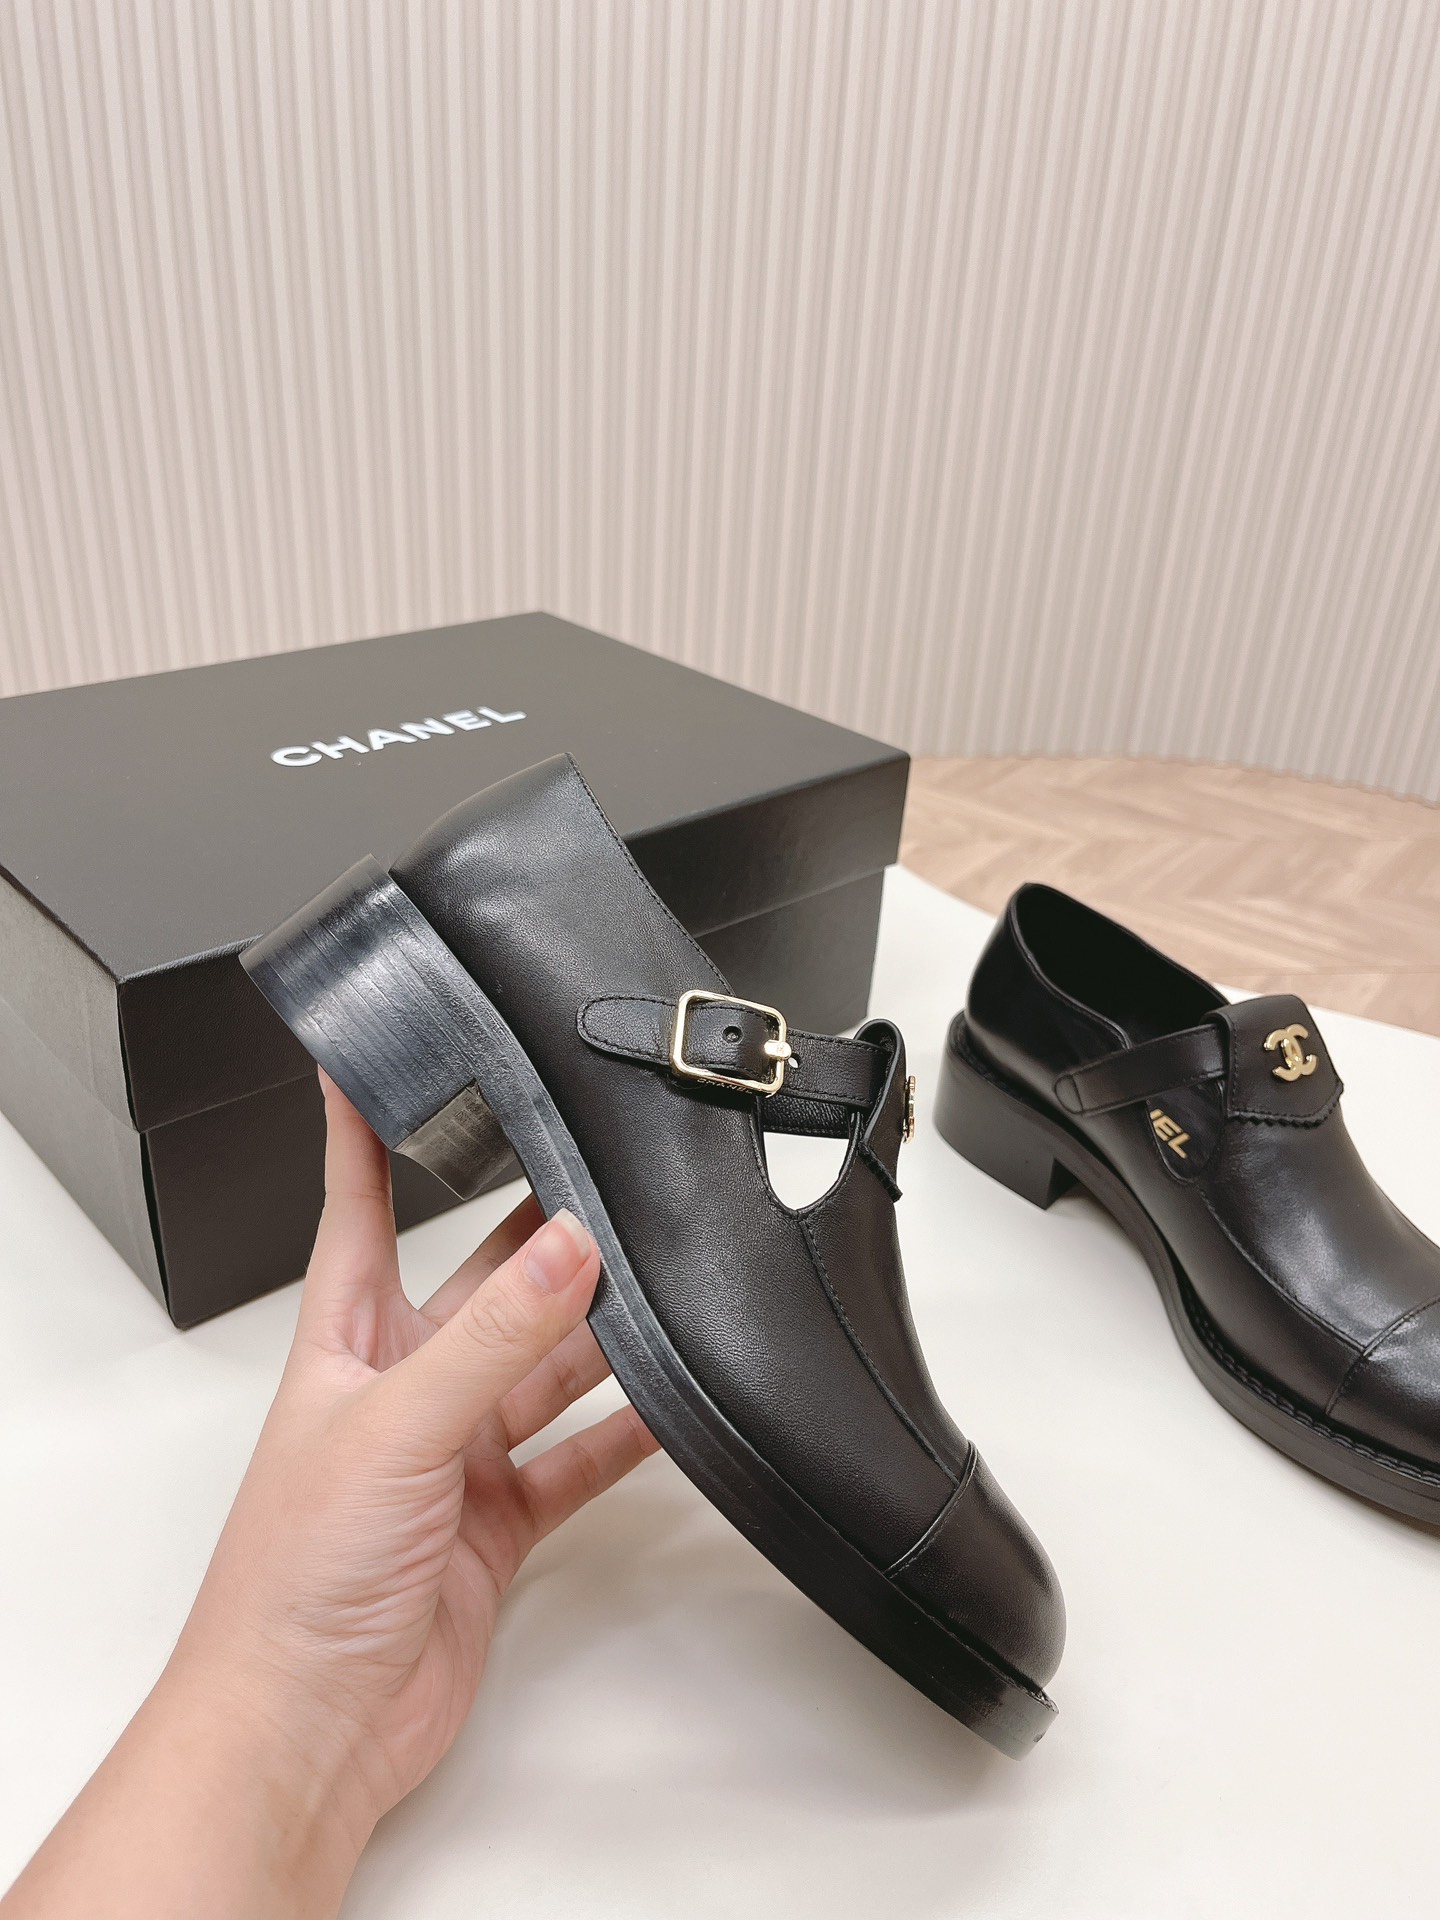 CHANELシャネルの靴Ｎ級品 レザー ファッション ローファーシンプル 厚い靴底 歩きやすい ブラック_3